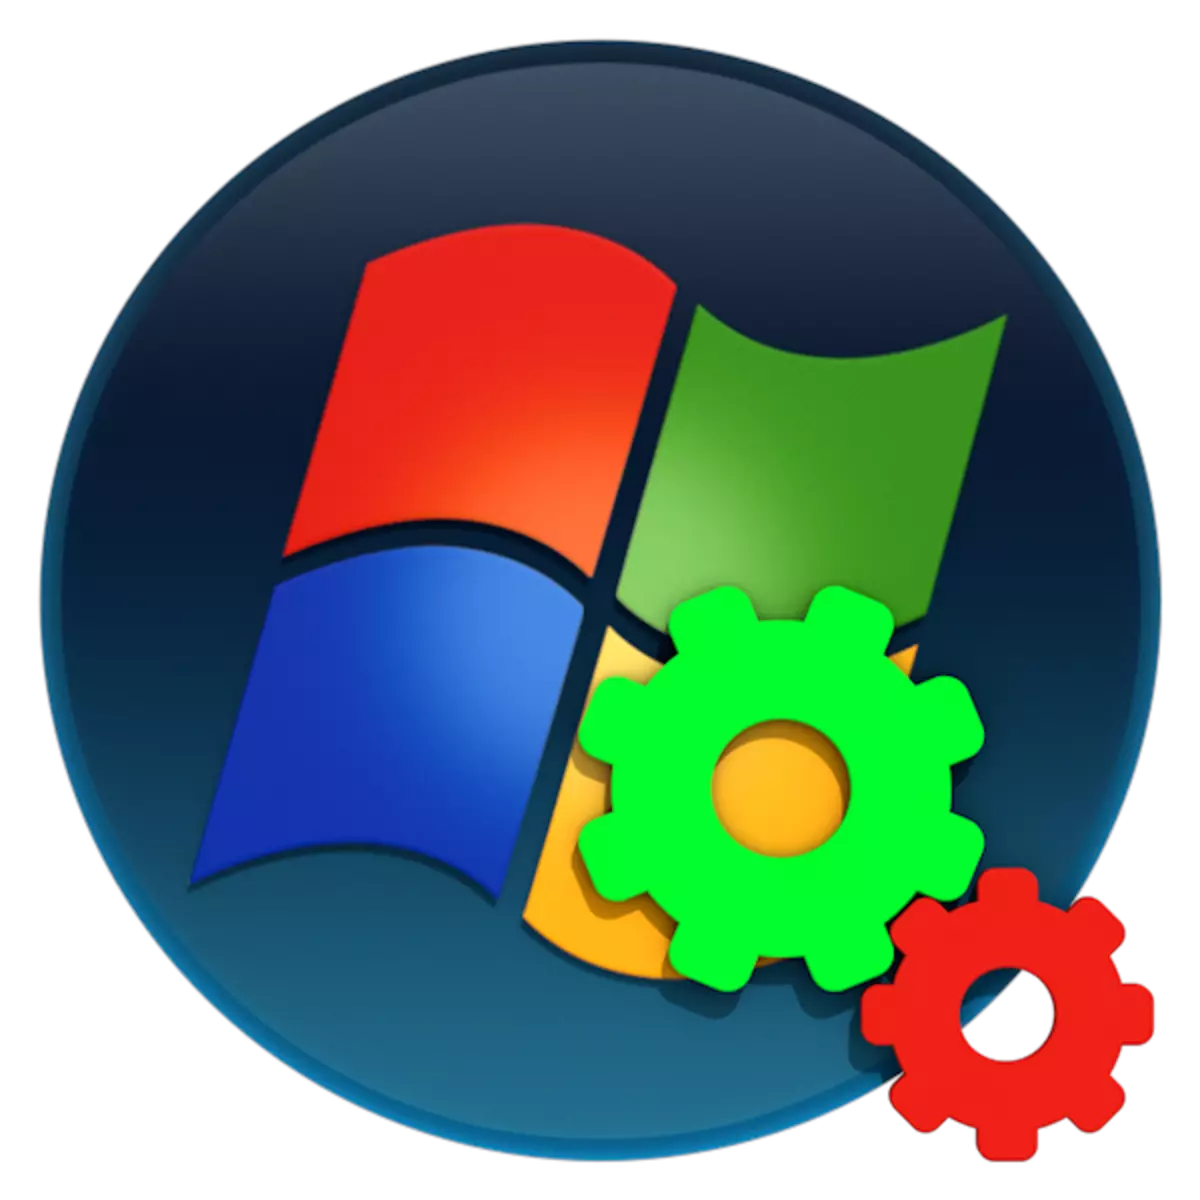 Windows 7 တွင် PC features များကိုမည်သို့ကြည့်ရှုနိုင်မည်နည်း